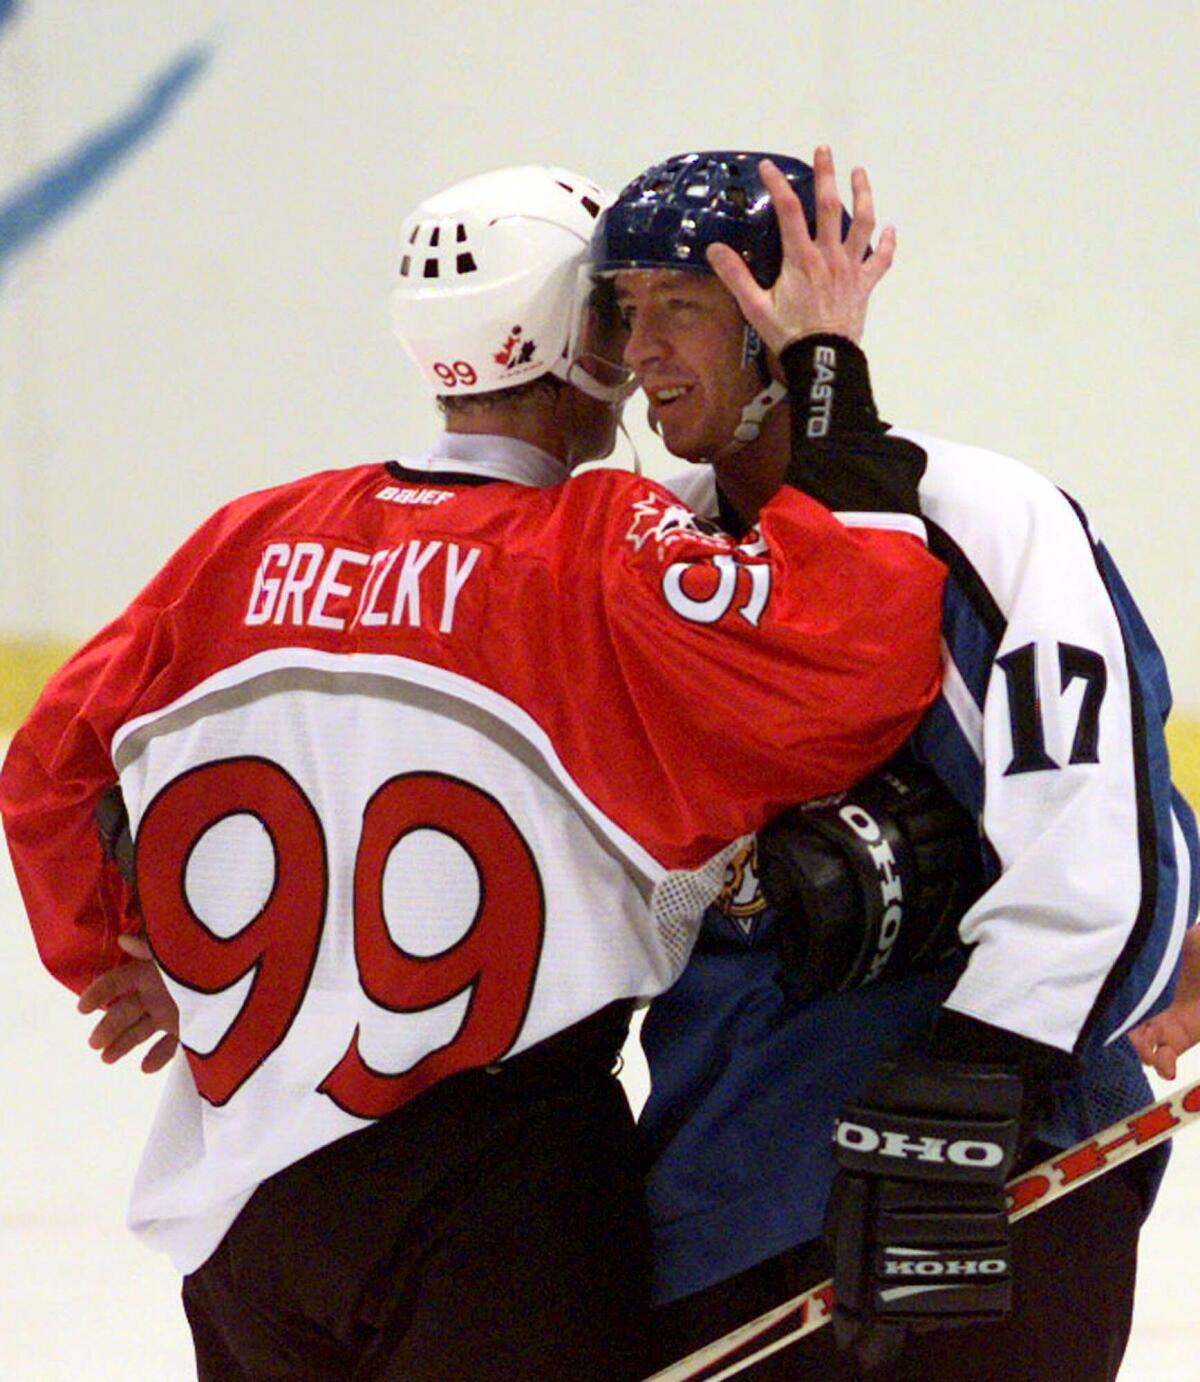 Wayne Gretzky and Jari Kurri embrace on the ice.